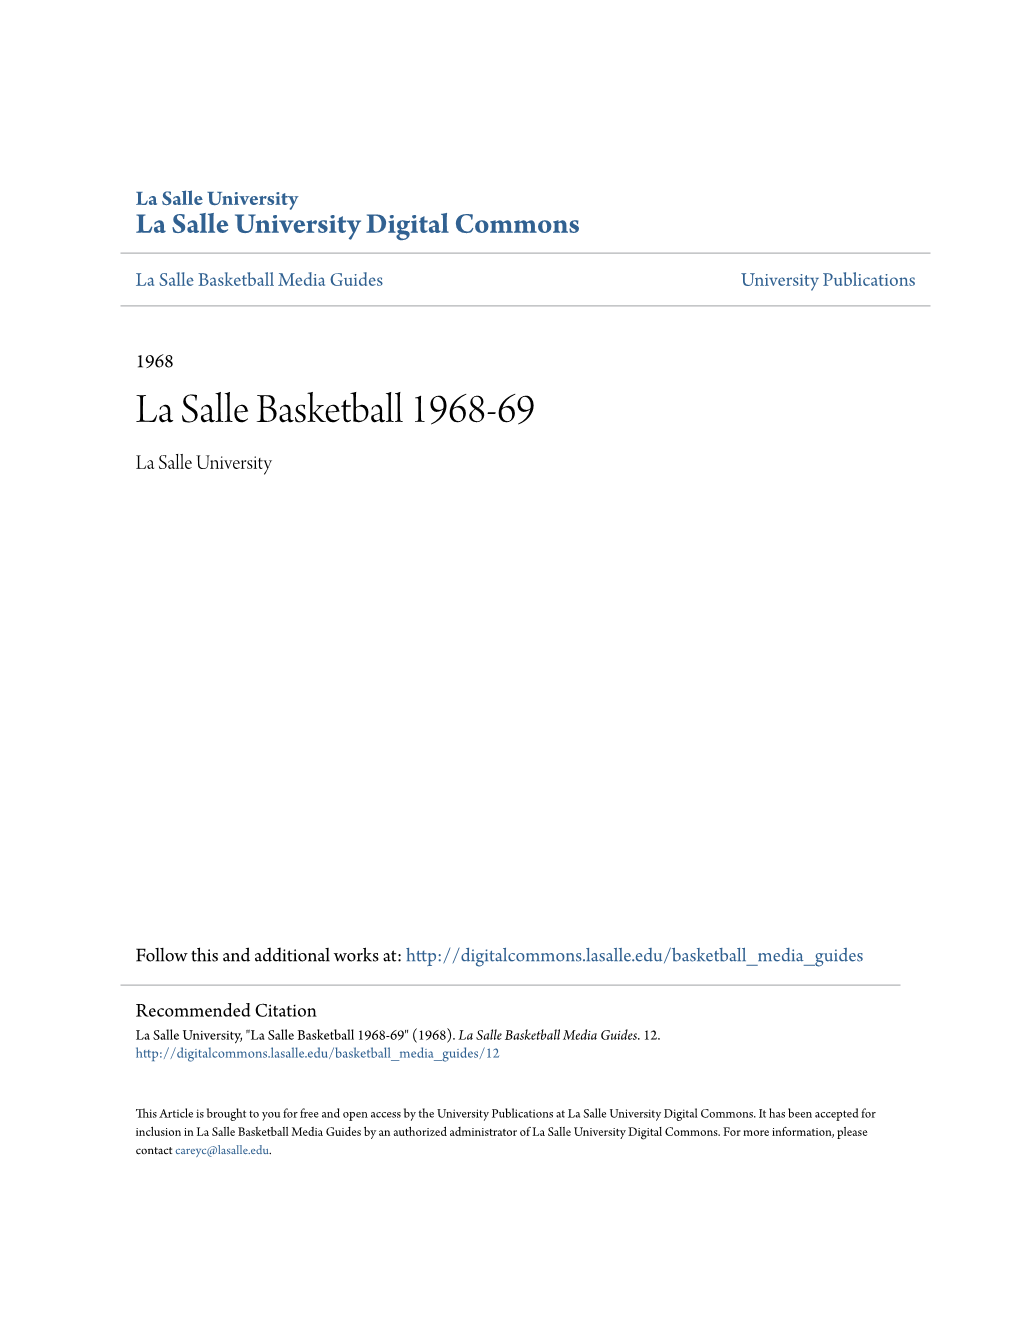 La Salle Basketball 1968-69 La Salle University